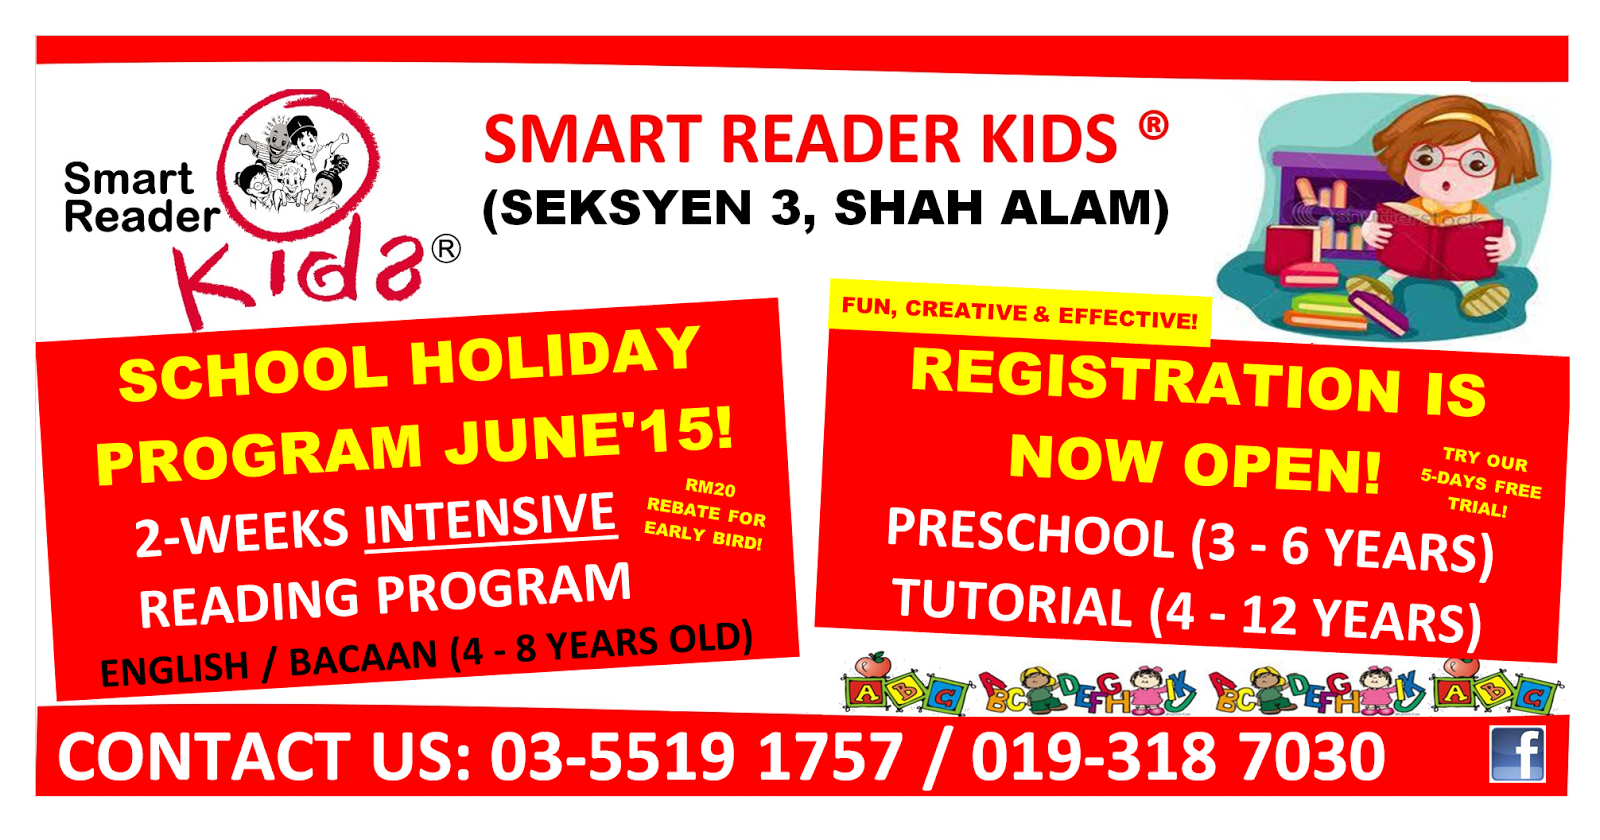 Smart Reader Kids, Seksyen 3 Shah Alam - Selangor Malaysia: School ...